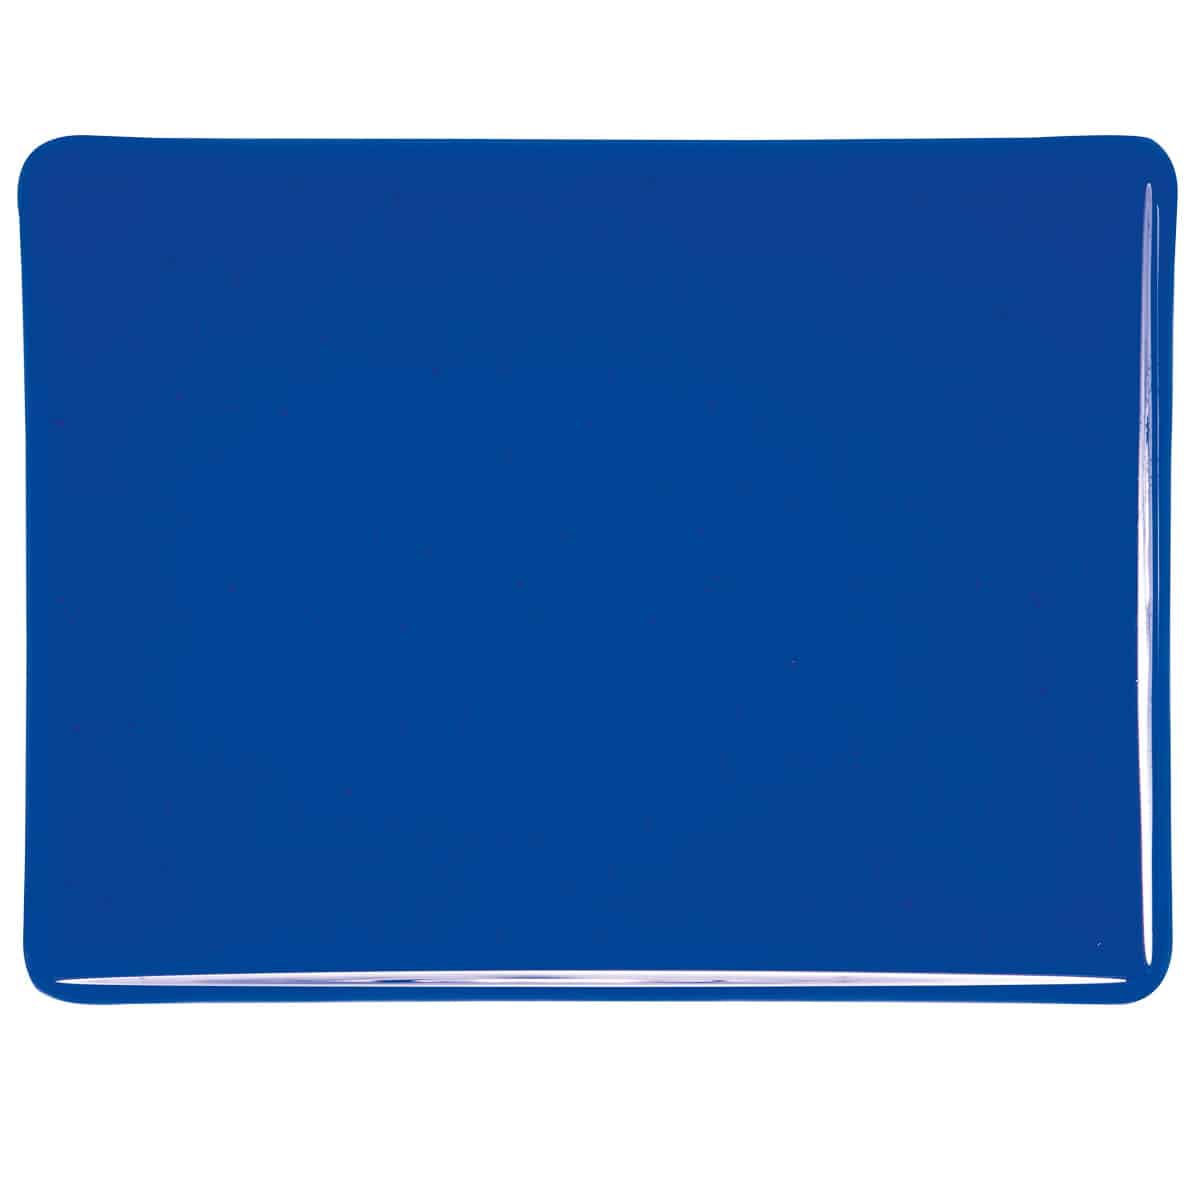 001114 Transparent Royal Blue sheet glass swatch